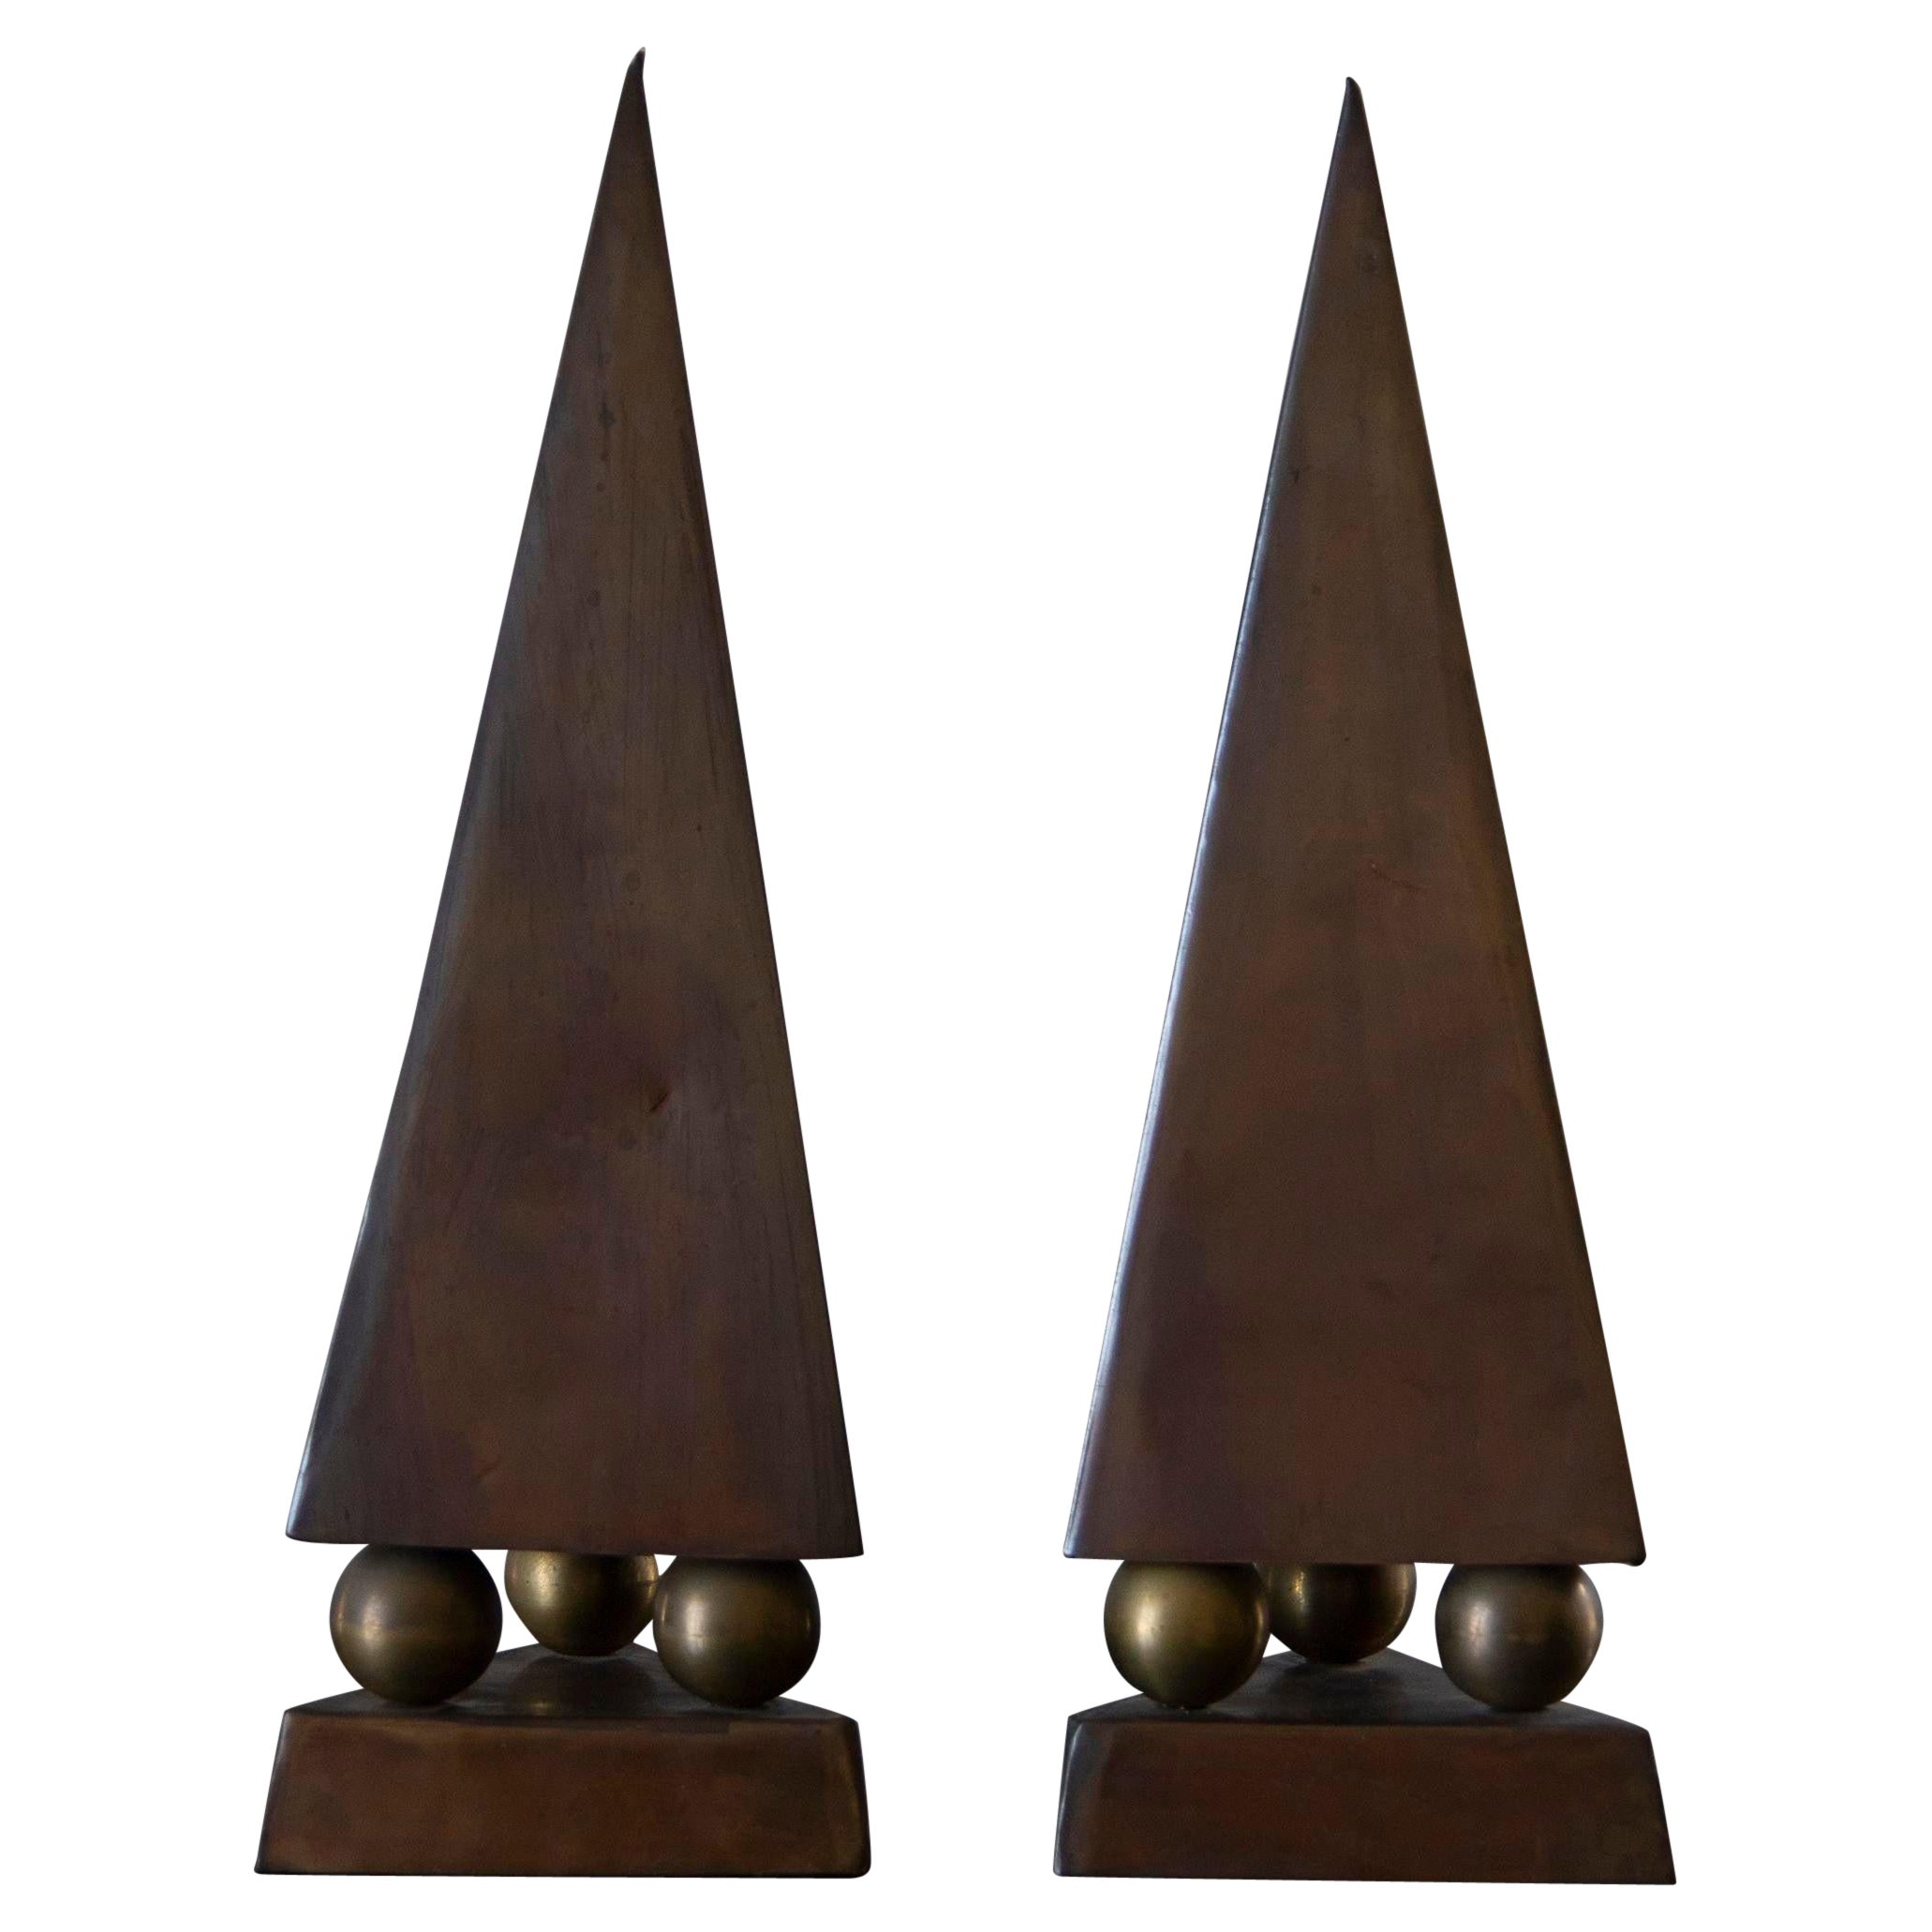 Contemporary "Pyramide" Brass by Design Frères - a Pair